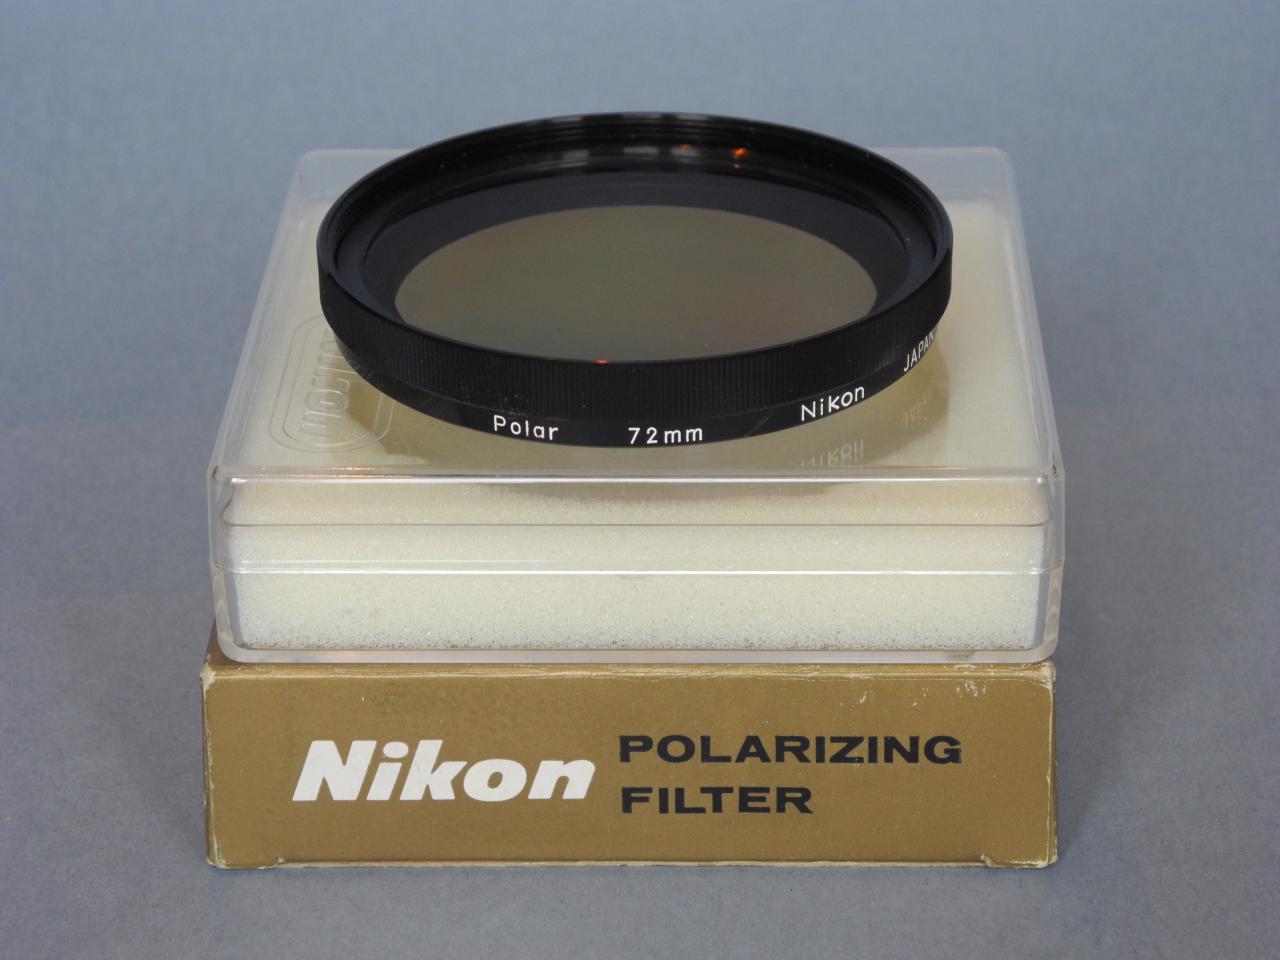 *Nikon filtre polar 72mm*